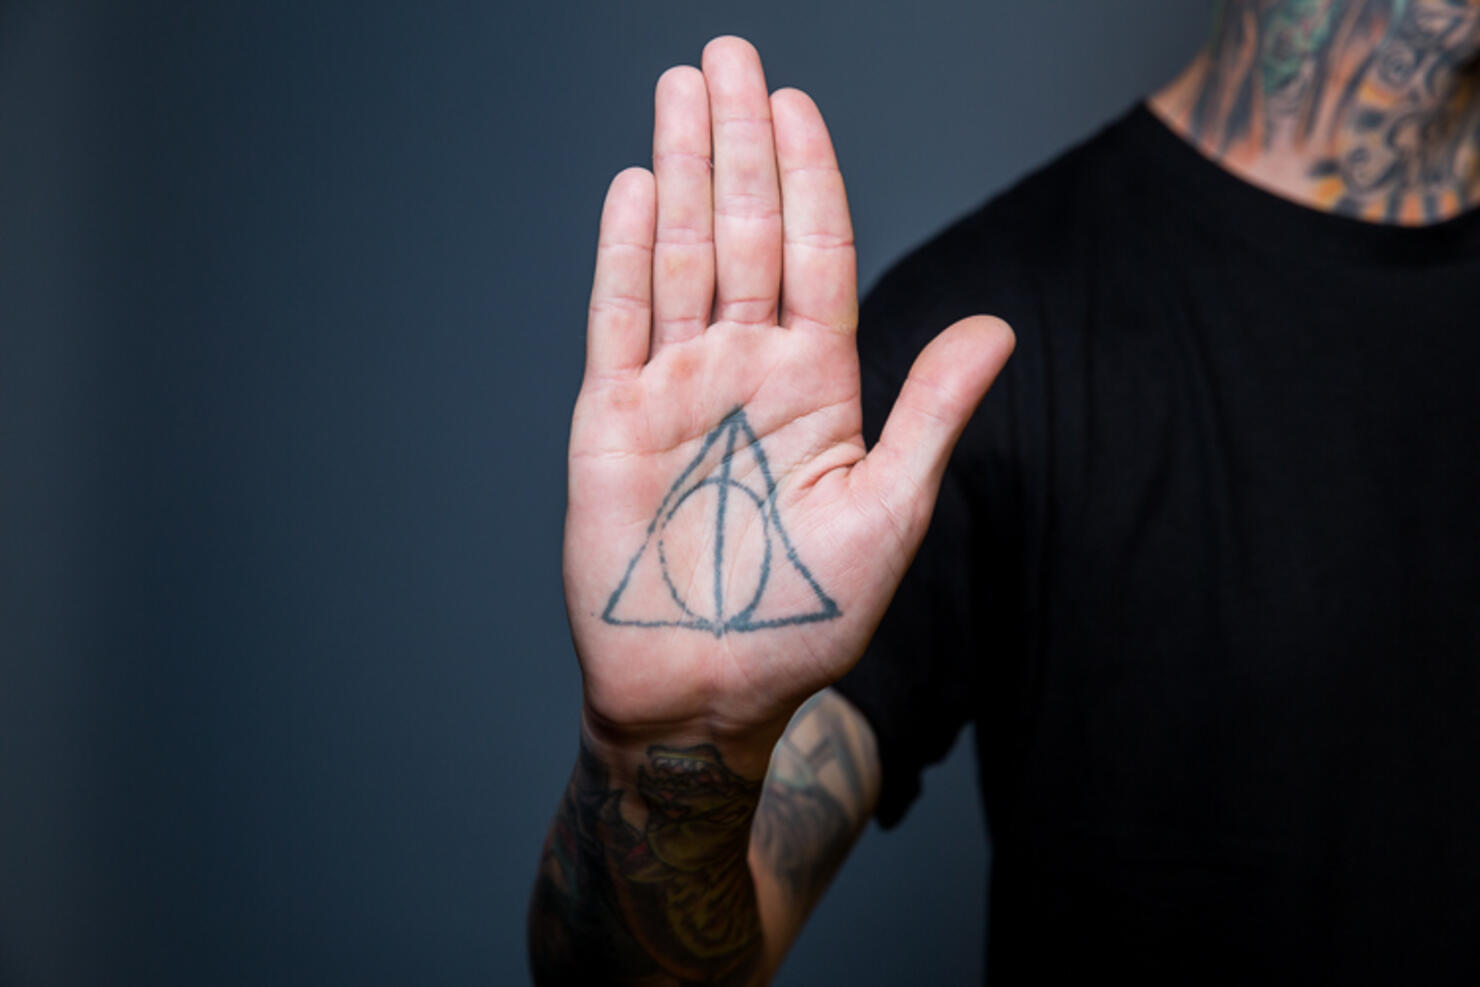 The Deathly Hallows Symbol Hand Tattoo